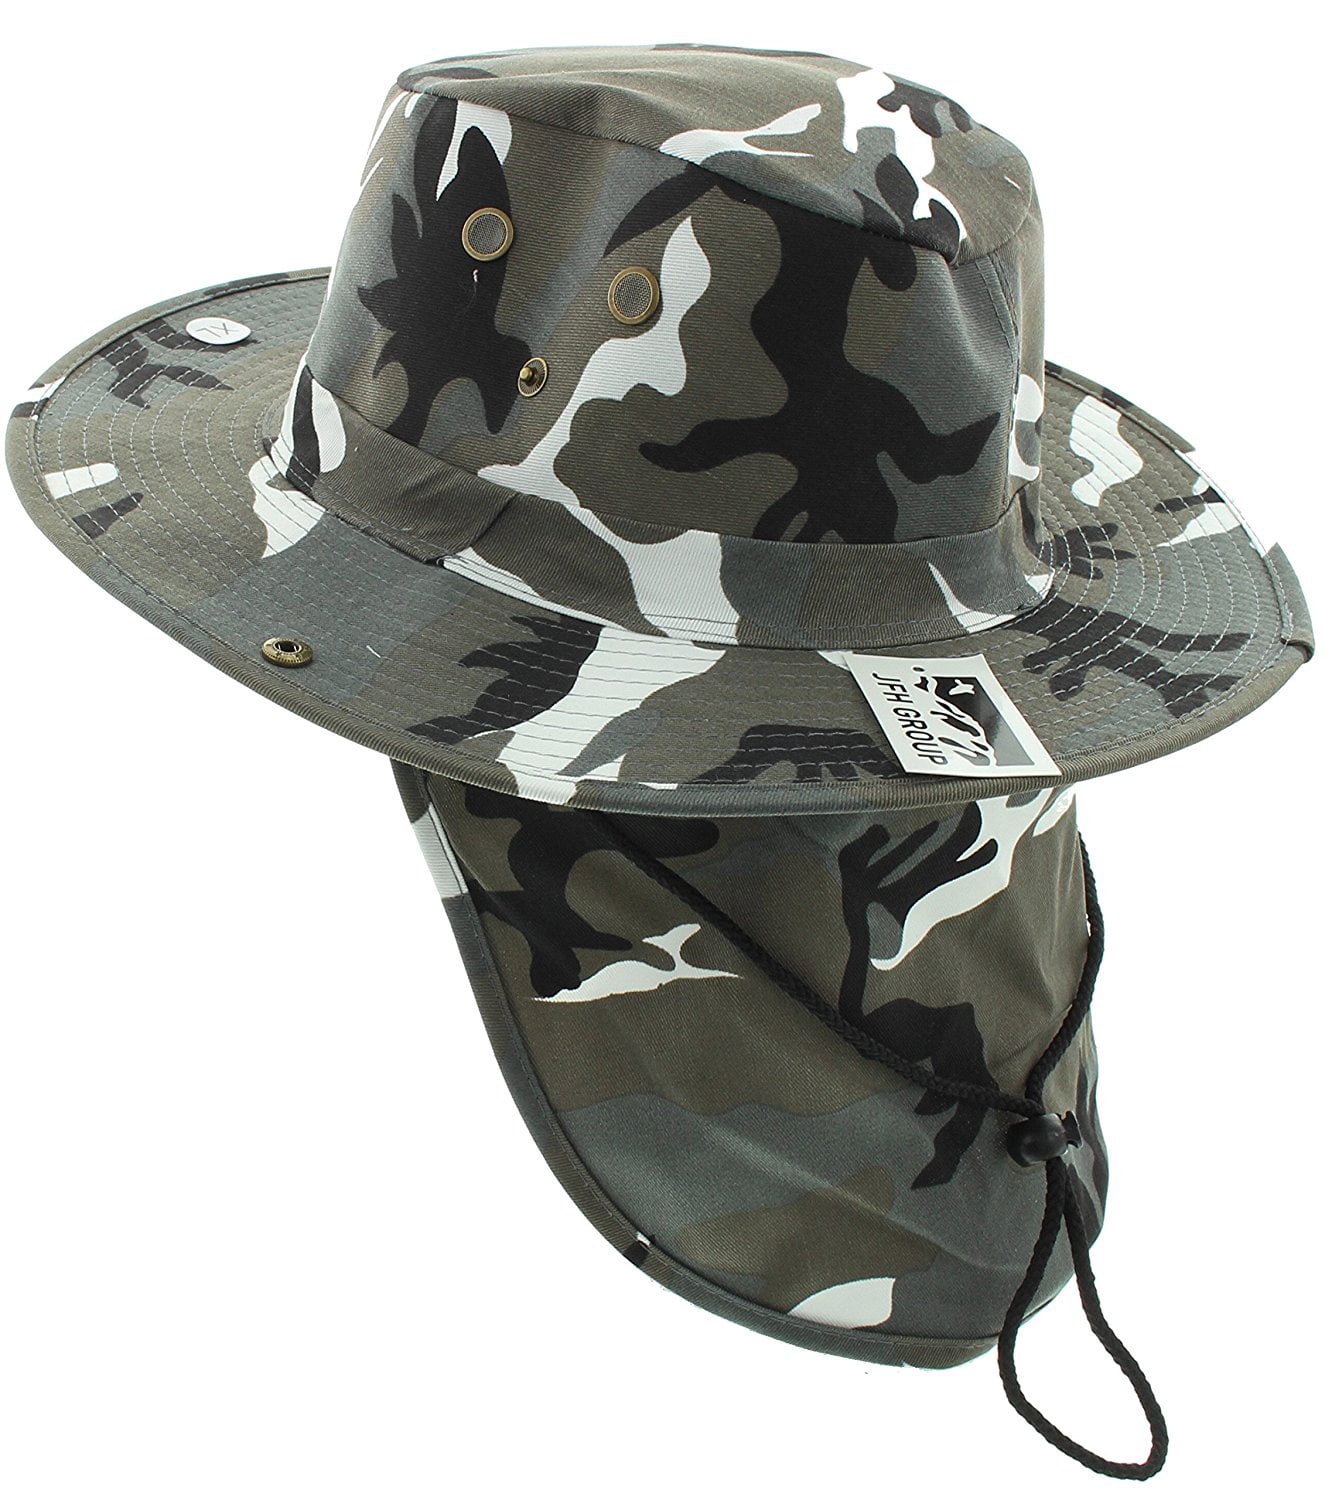 JFH Wide Brim Bora Booney Outdoor Safari Summer Hat w/Neck Flap & Sun  Protection 